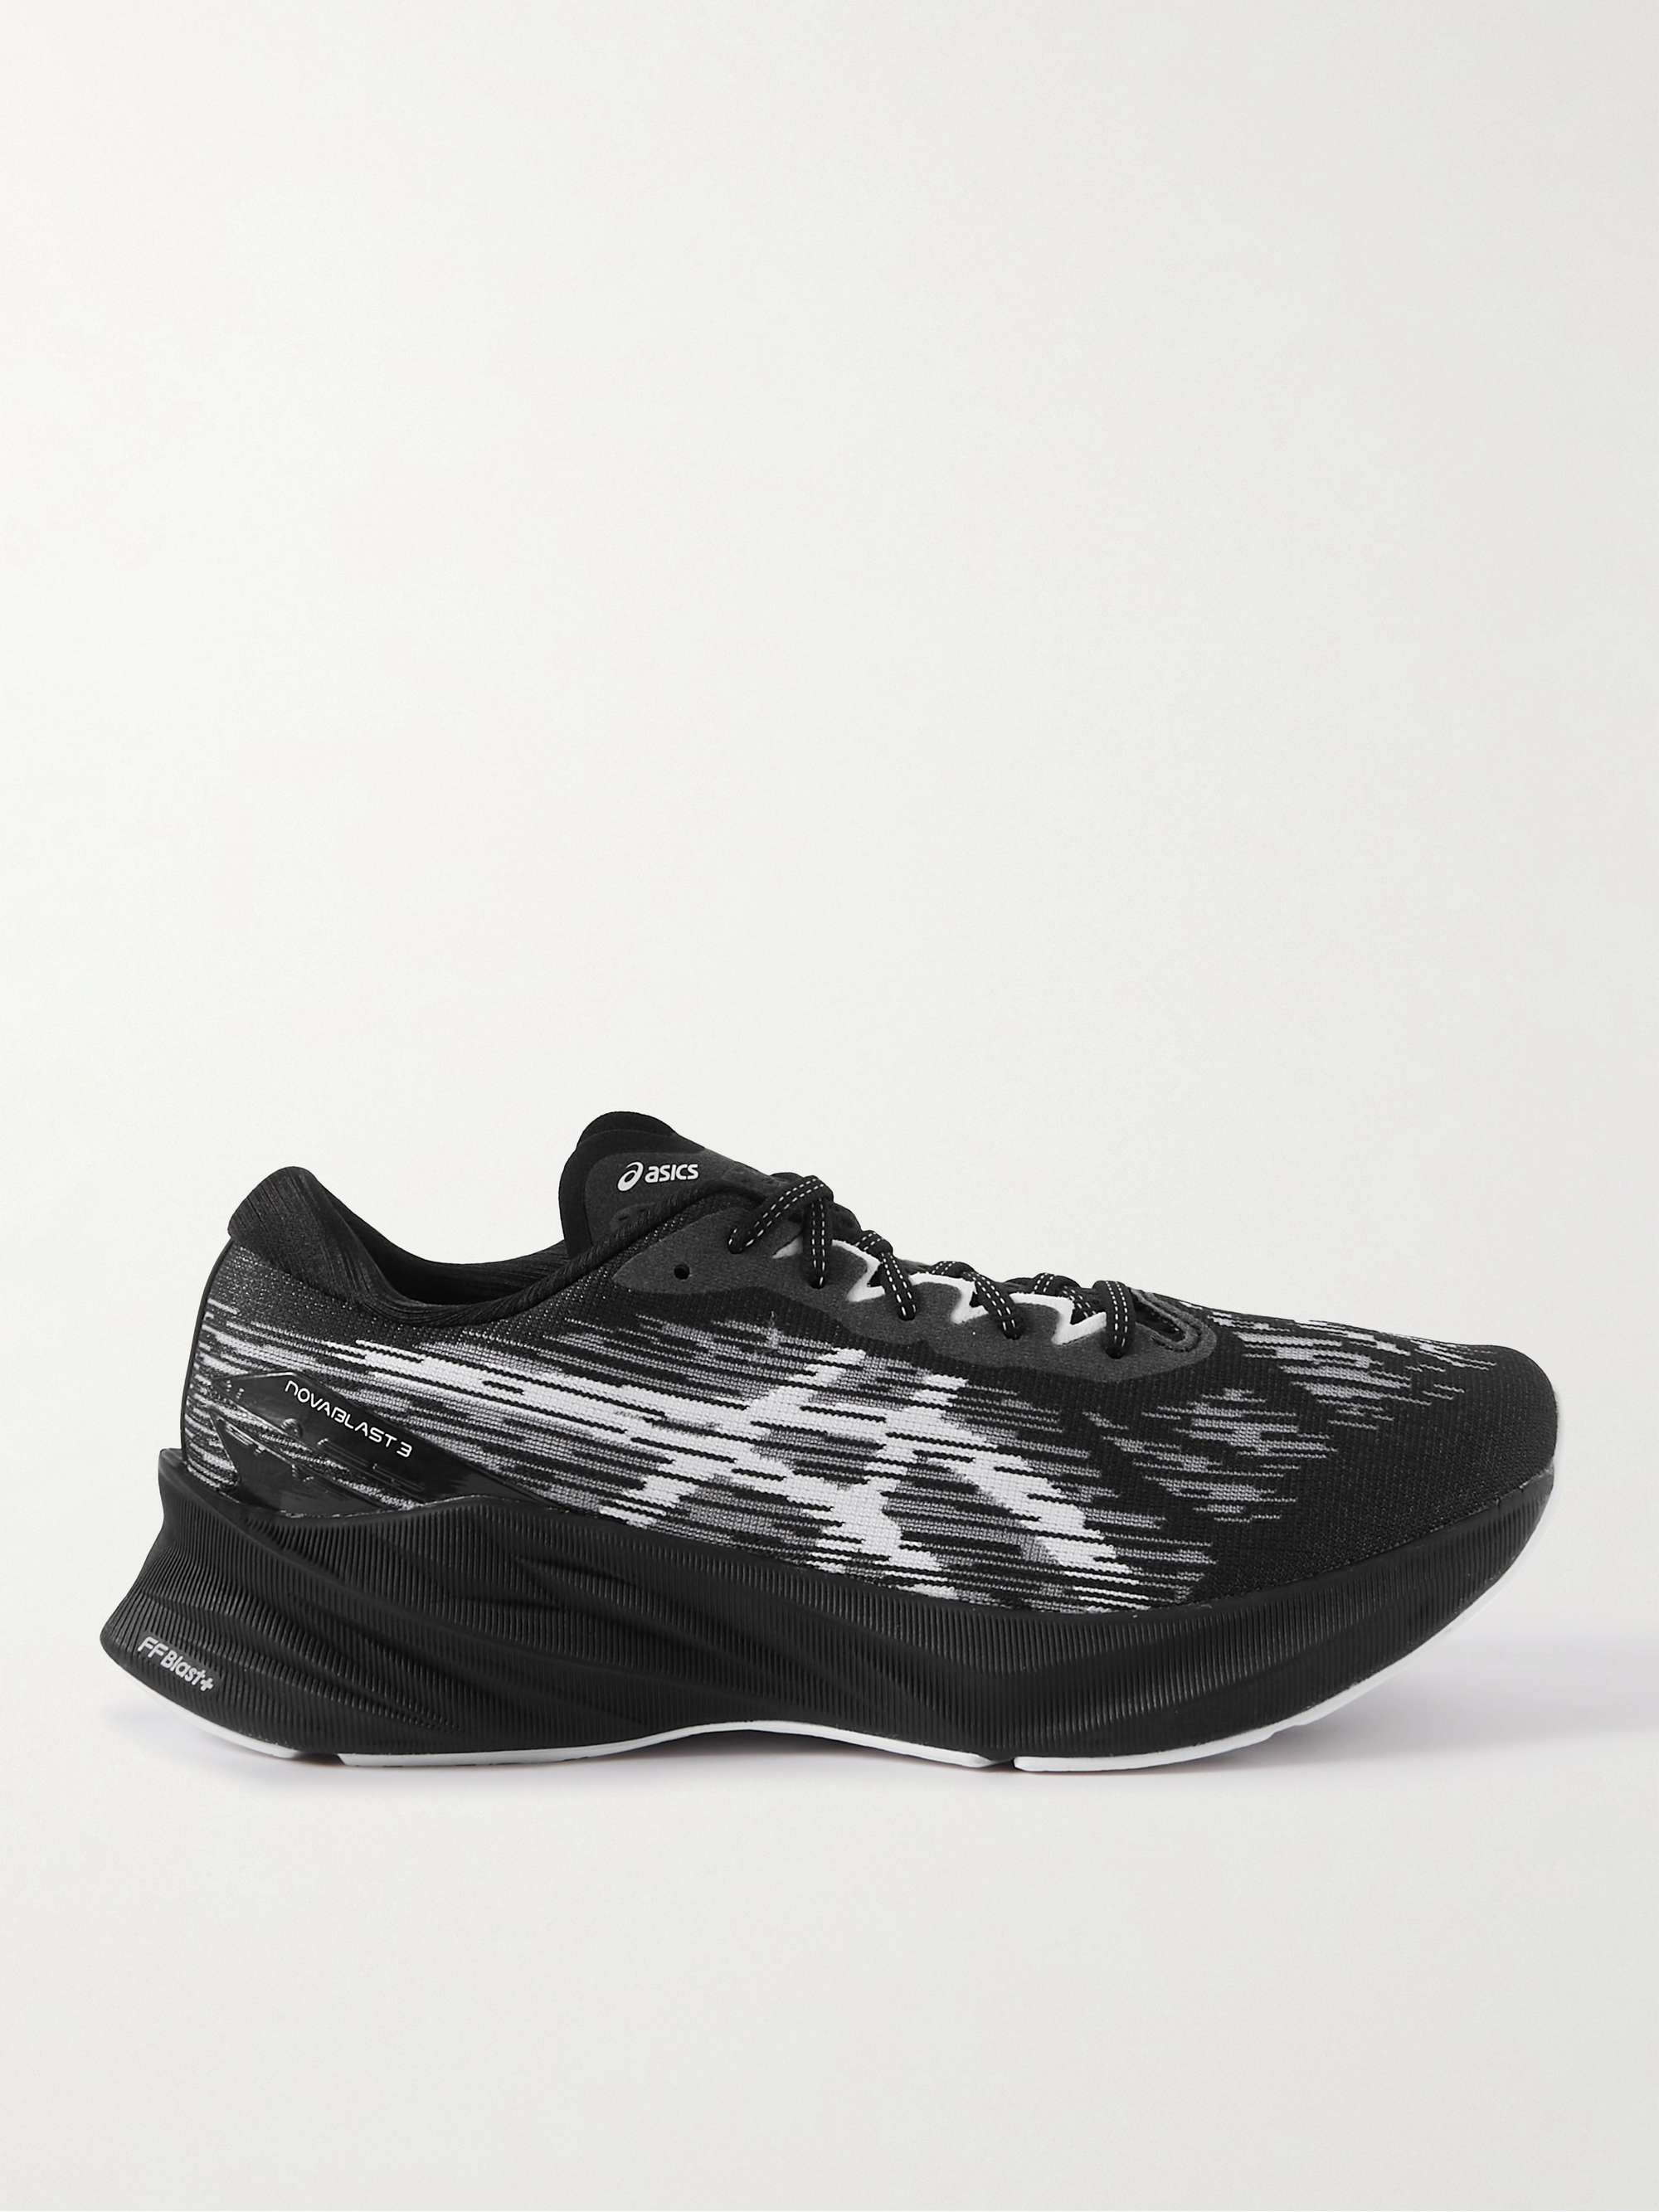 Black Novablast 3 Rubber-Trimmed Mesh Running Shoes | ASICS | MR PORTER